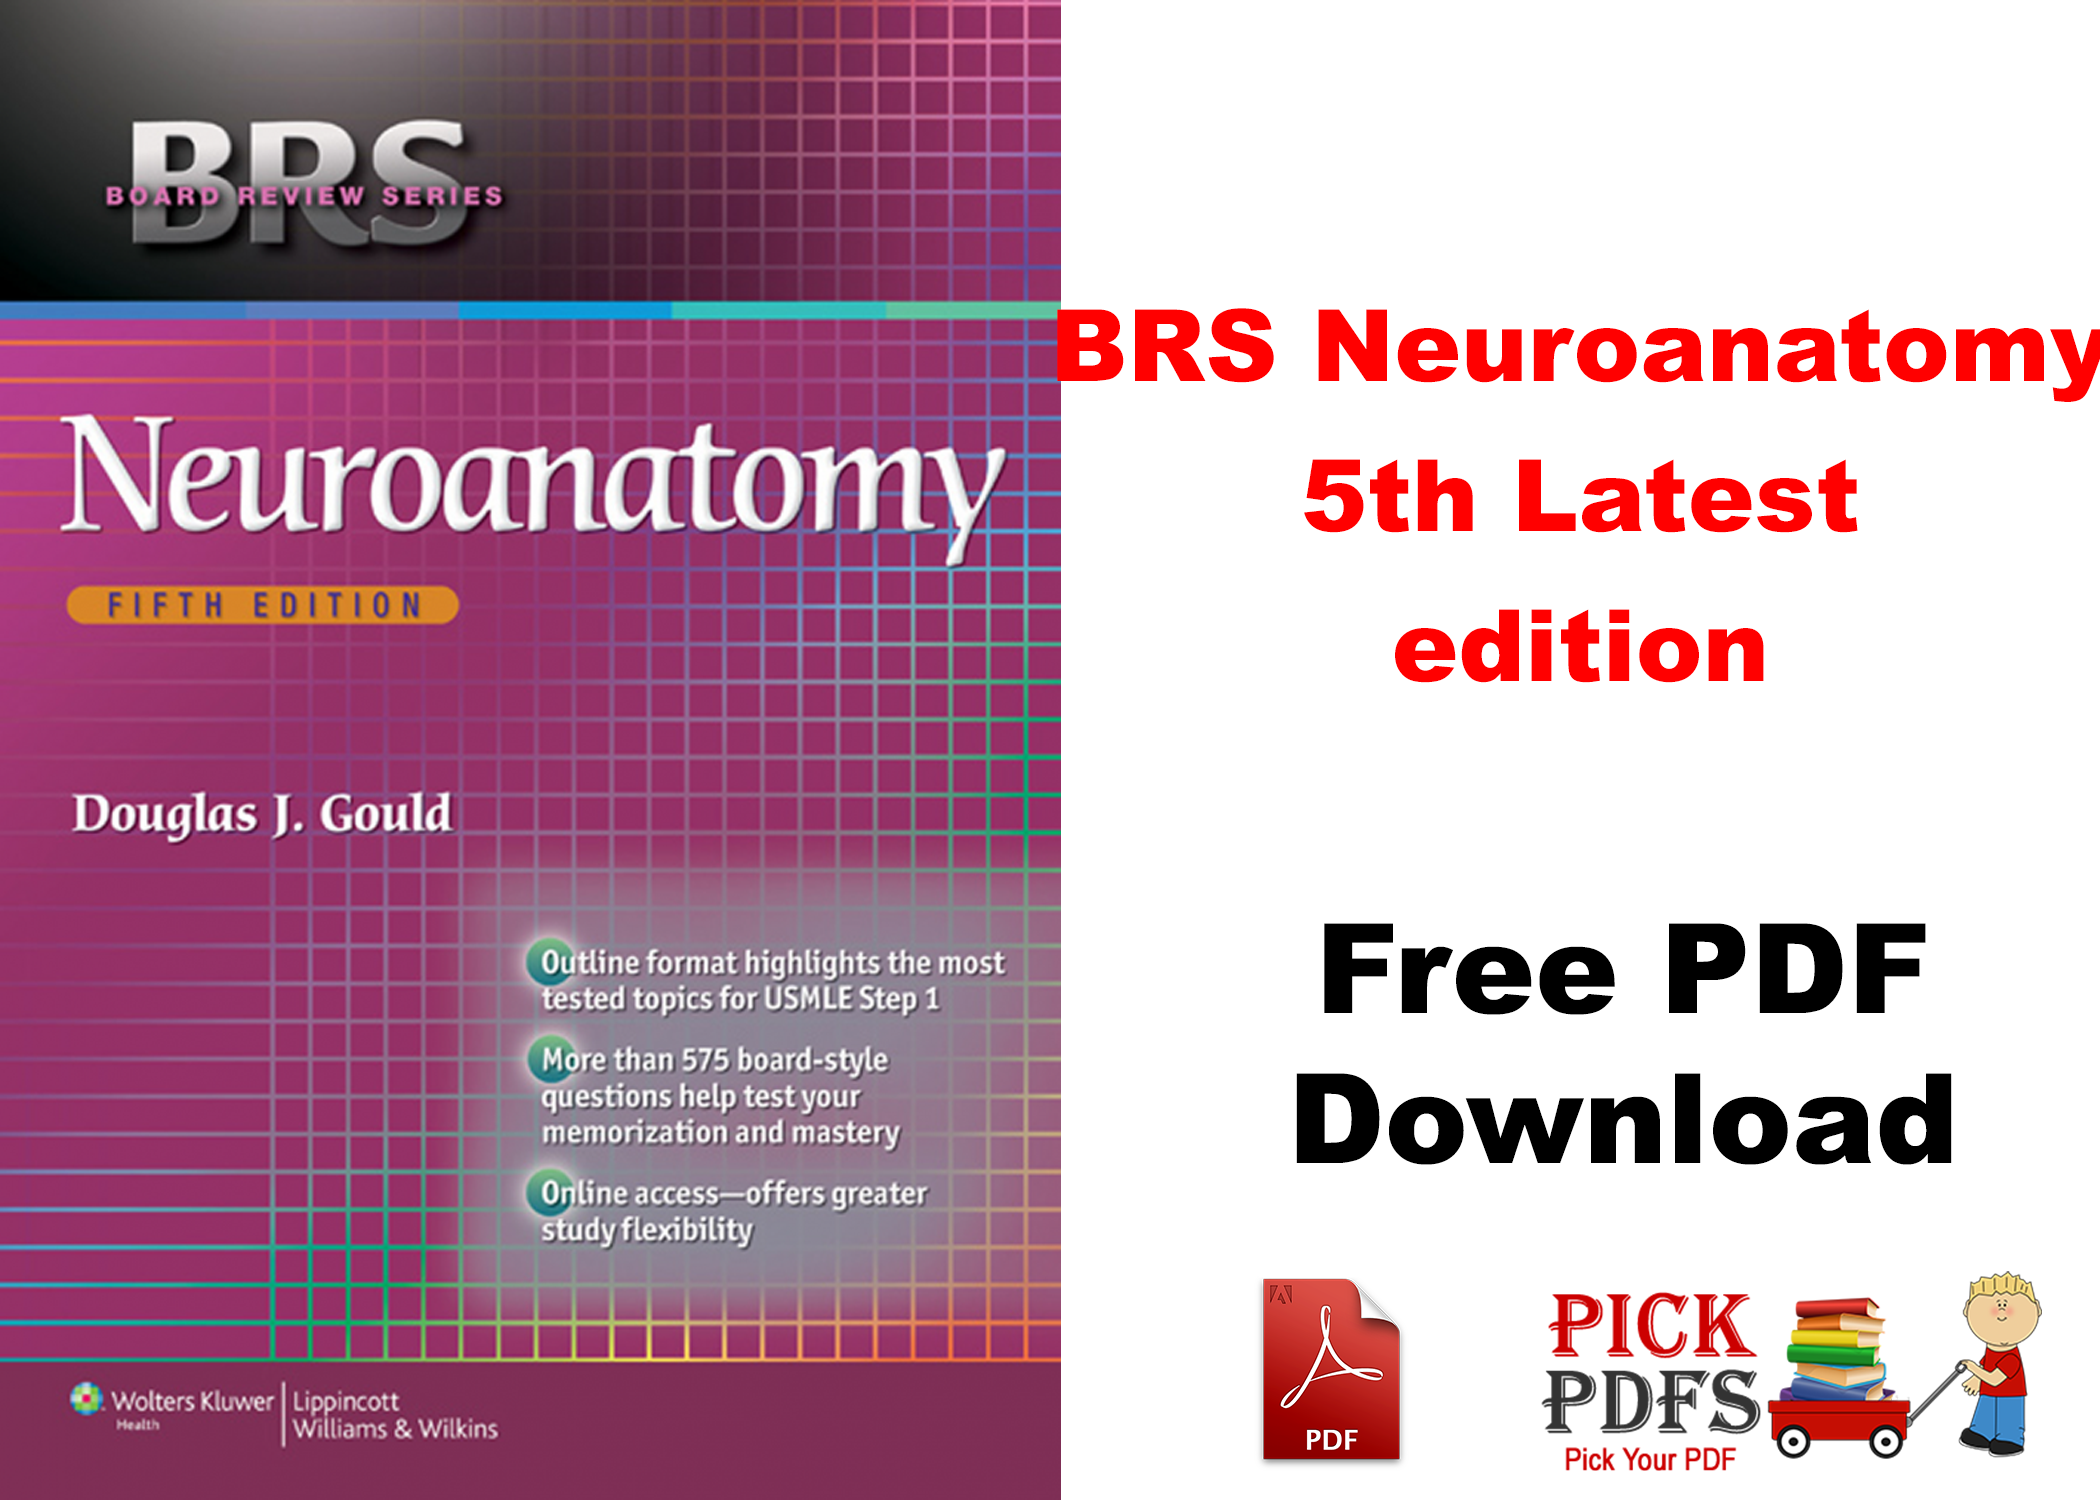 https://pickpdfs.com/brs-neuroanatomy-5th-latest-edition-free-pdf-book-download/